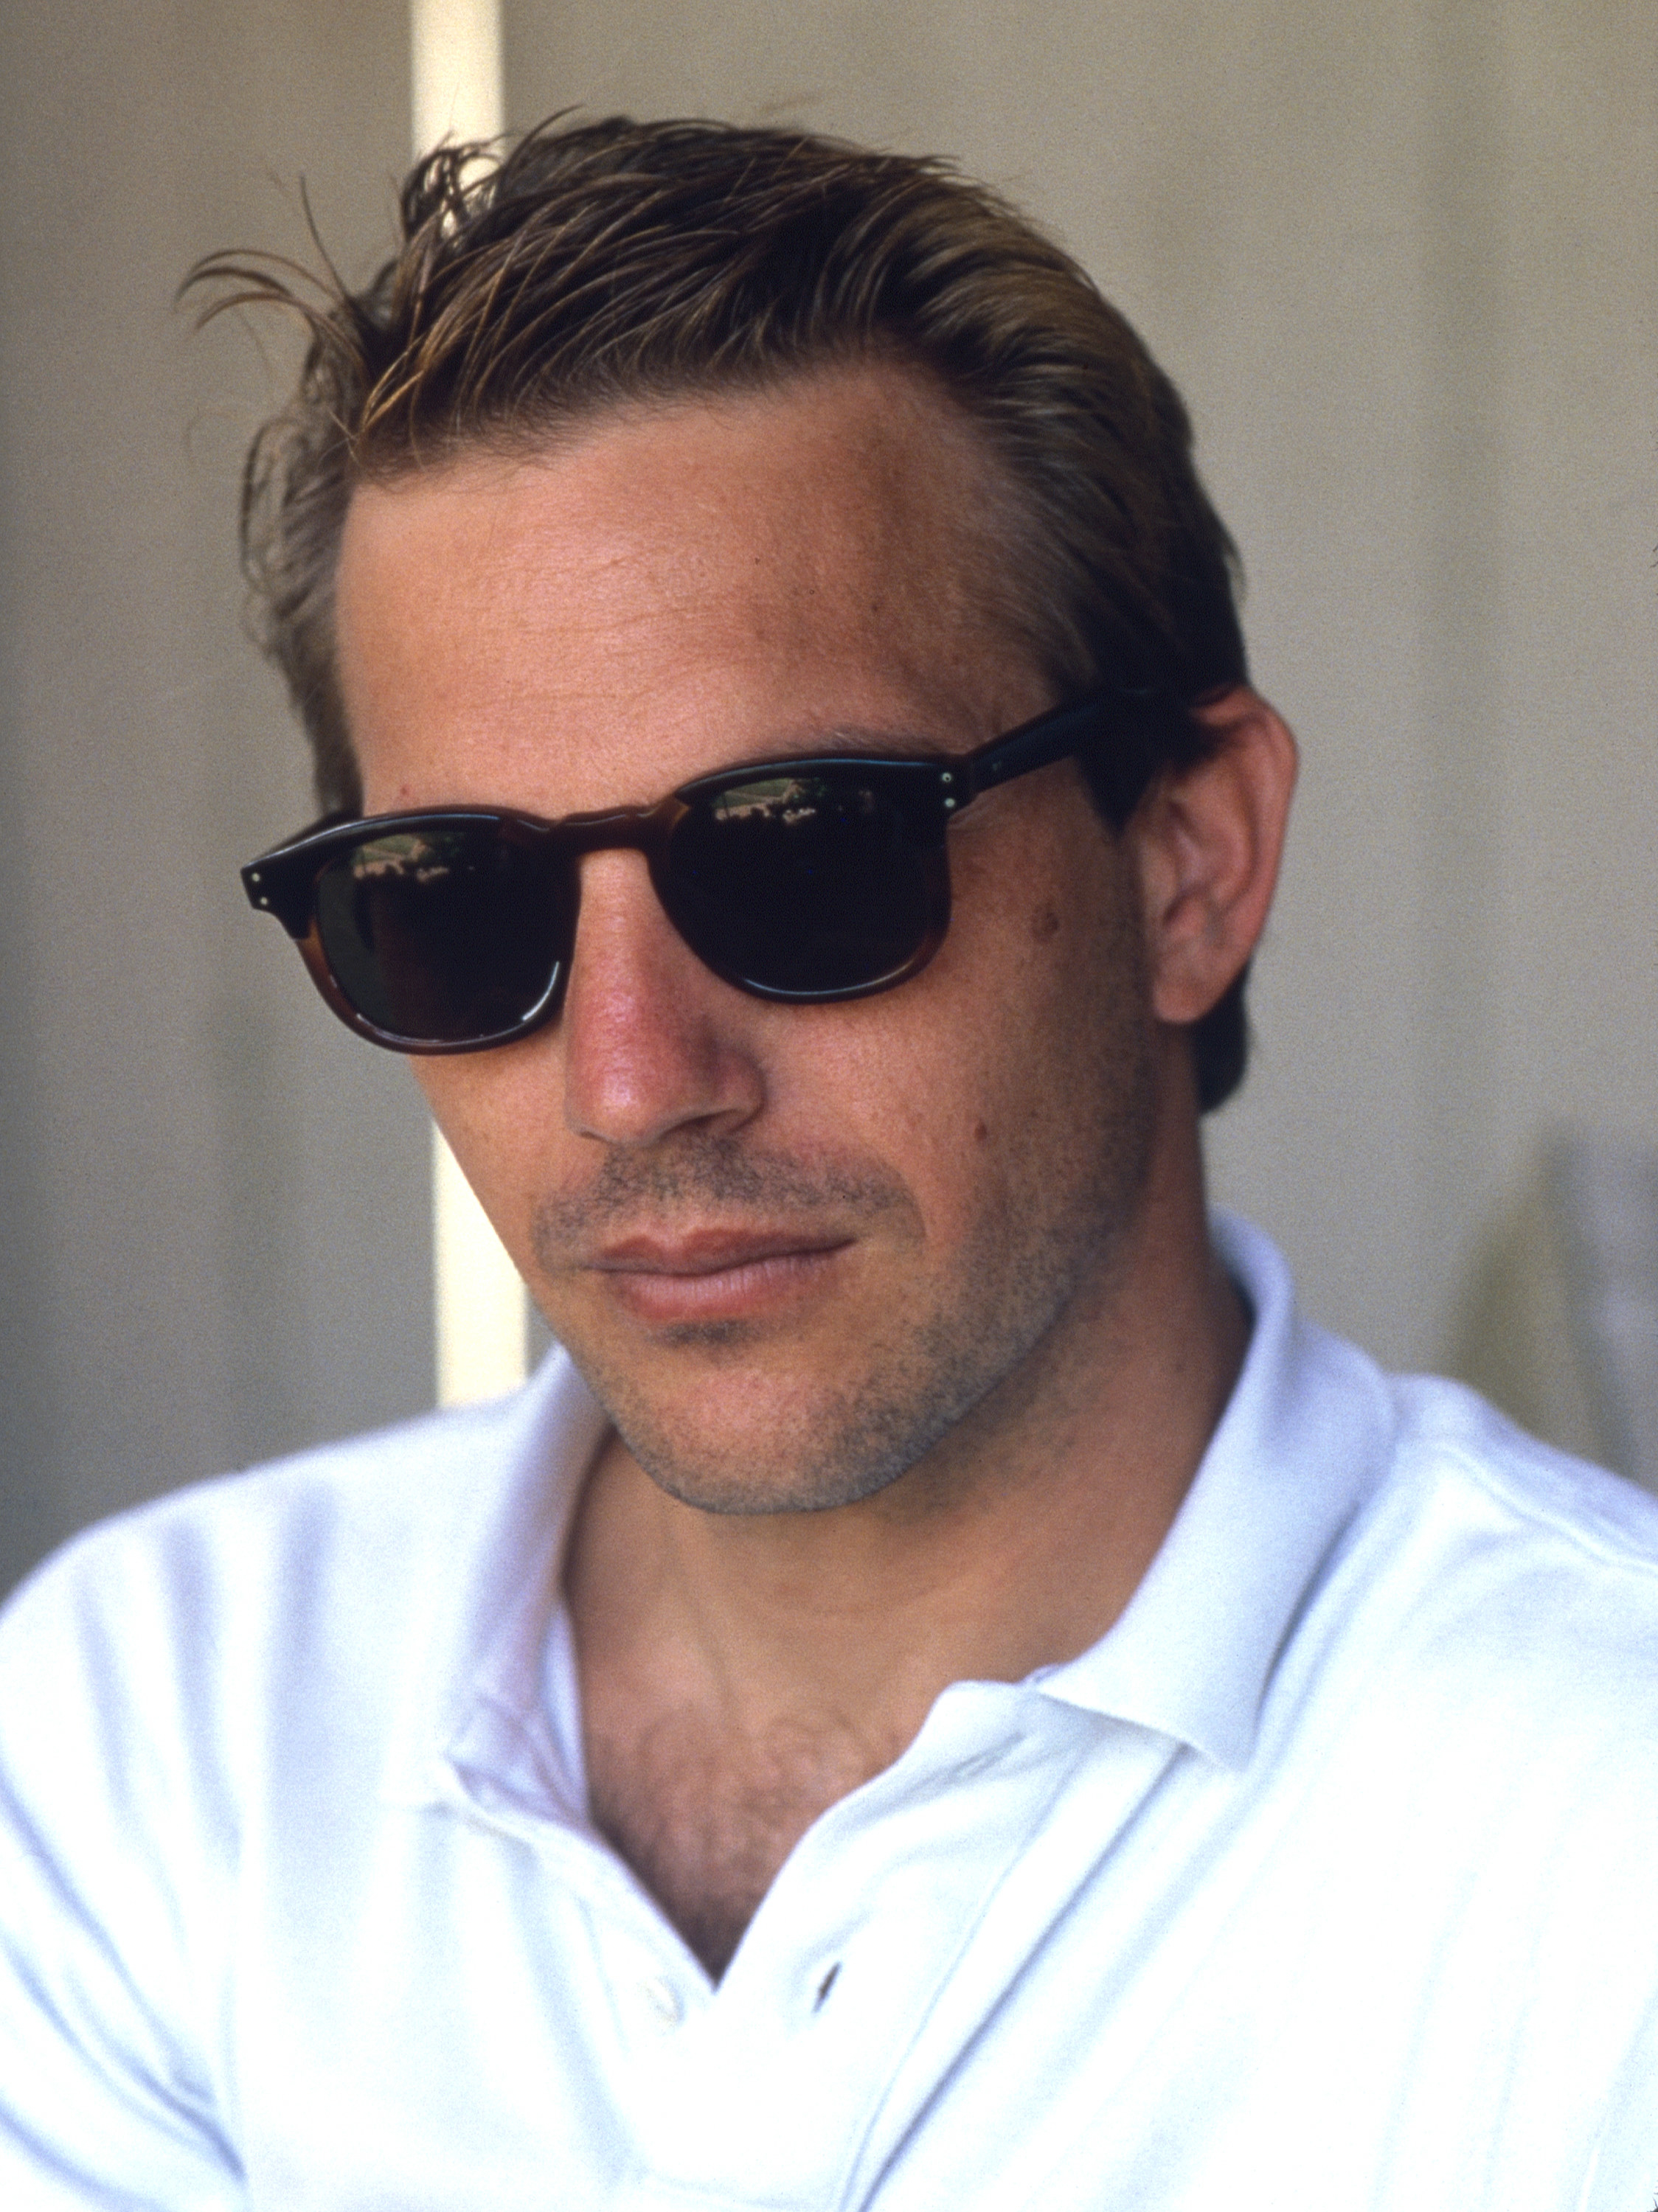 Kevin Costner wearing sunglasses